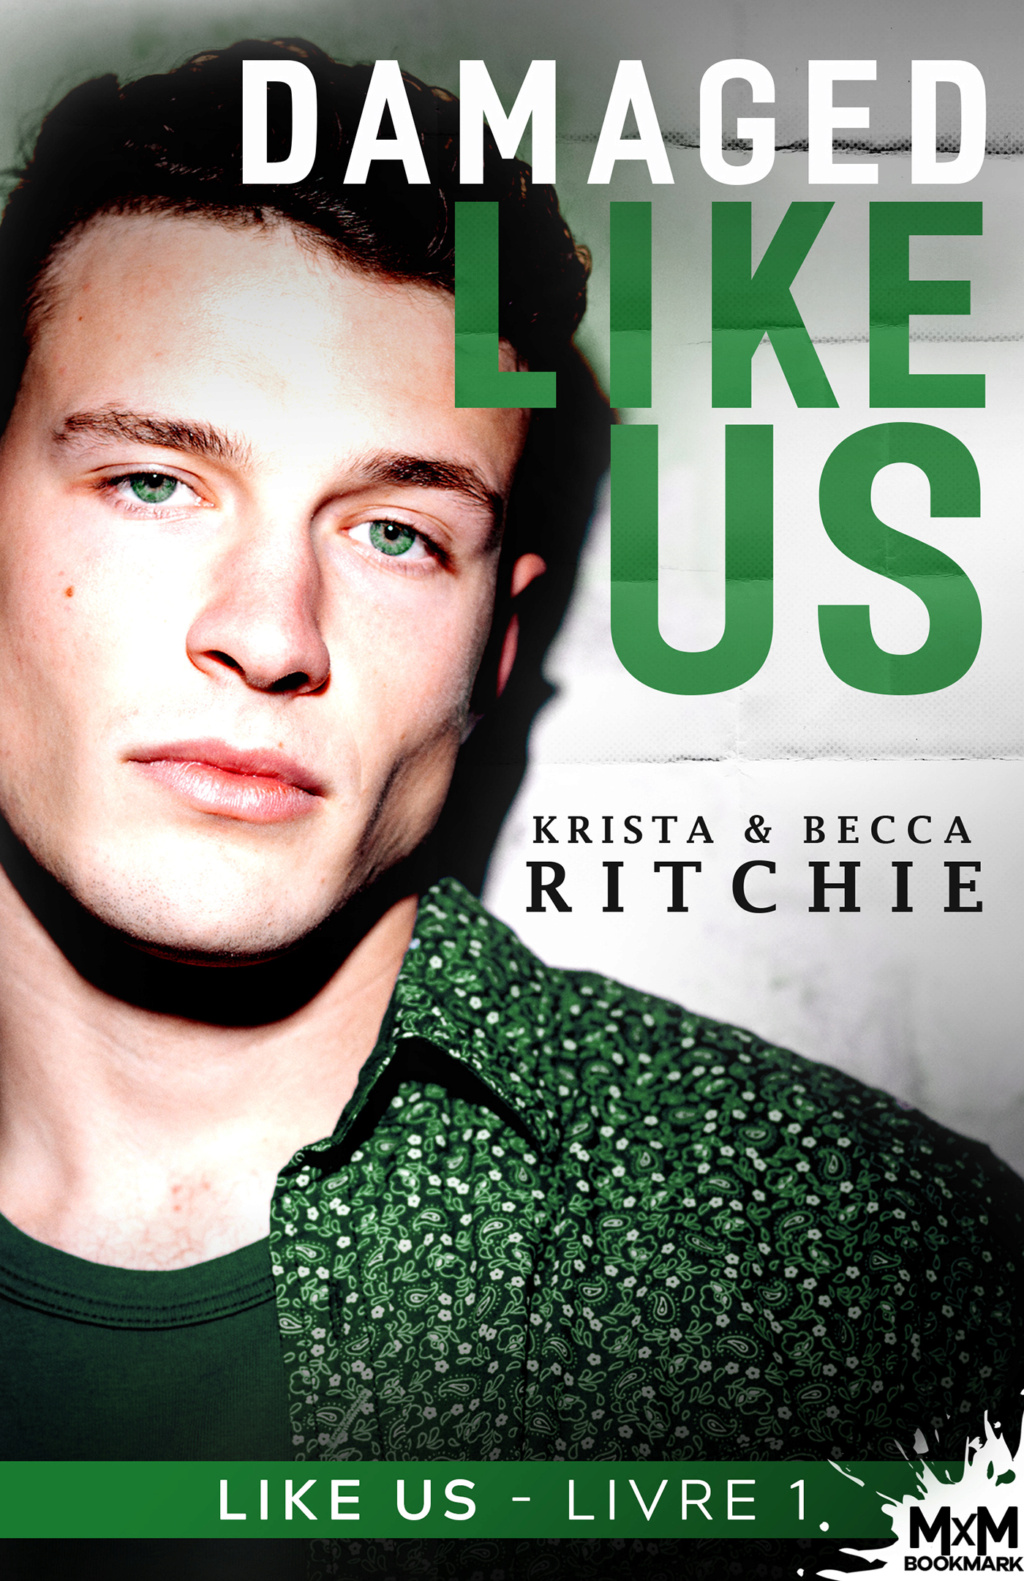 Like us - Tome 1 : Damaged like us de Krista Ritchie & Becca Ritchie 07a1ae10